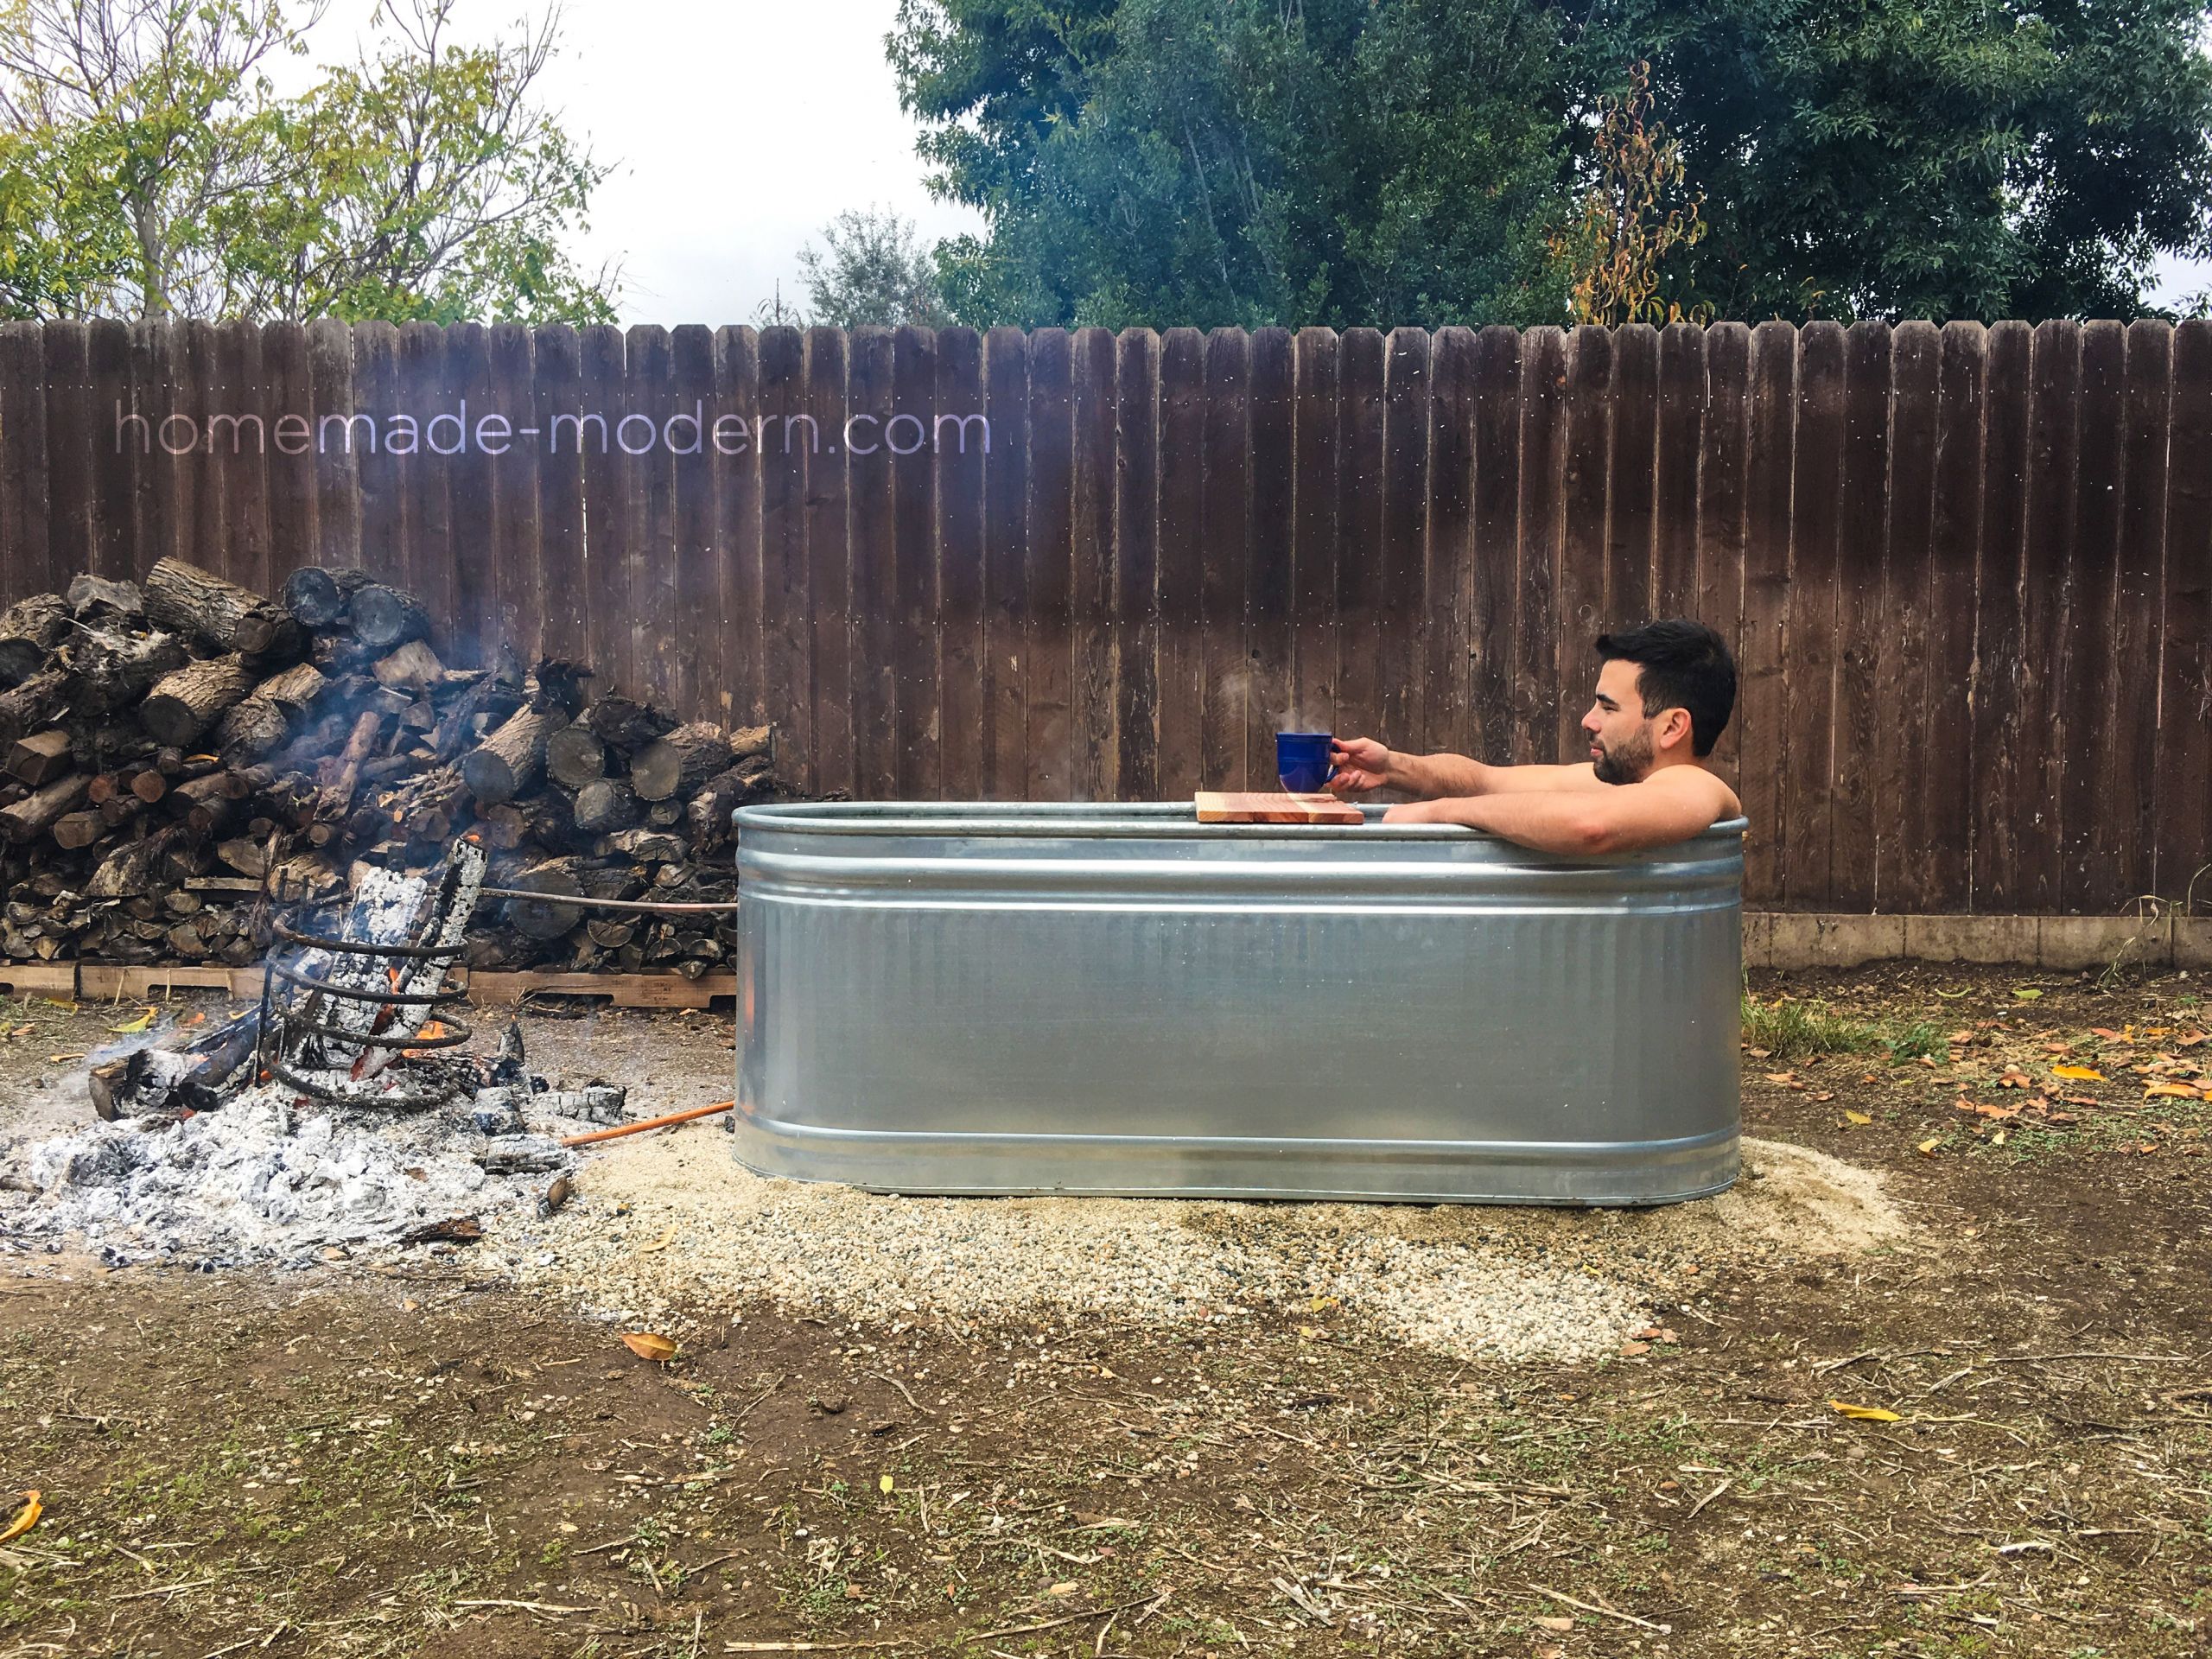 DIY Wood Fired Hot Tub Heater
 HomeMade Modern EP112 DIY Wood Fired Hot Tub